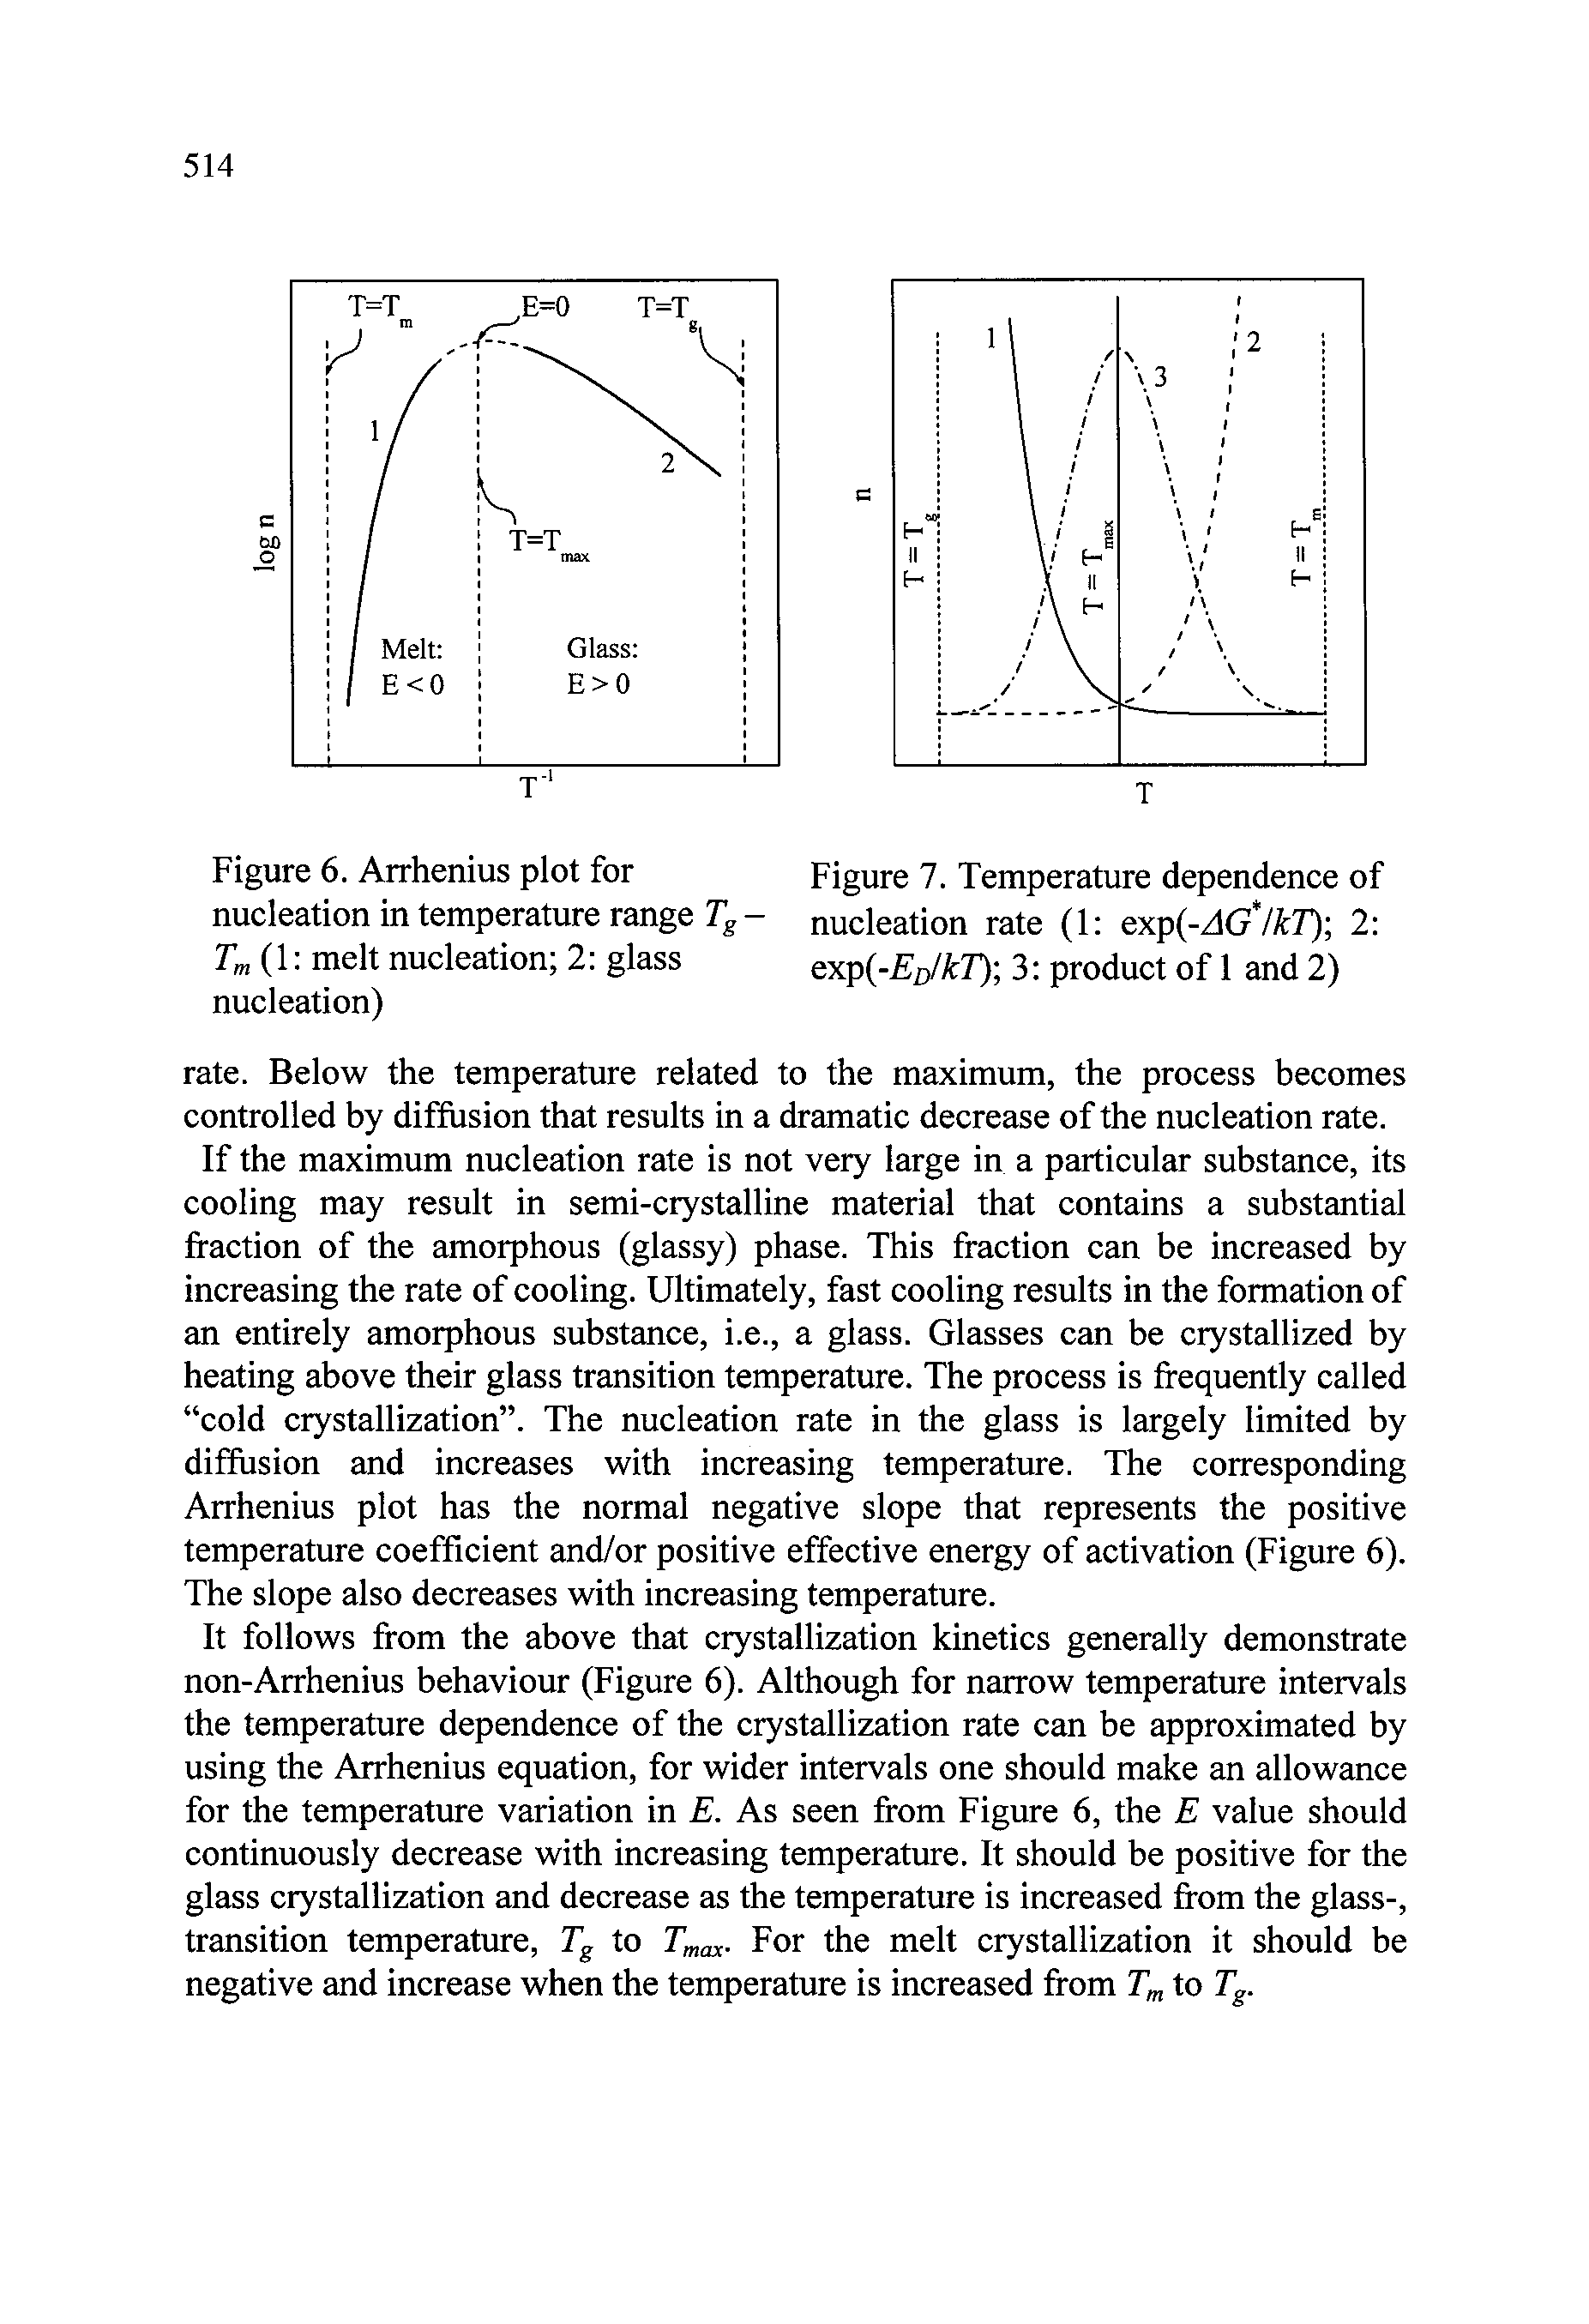 Figure 6. Arrhenius plot for nucleation in temperature range Tg -(1 melt nucleation 2 glass nucleation)...